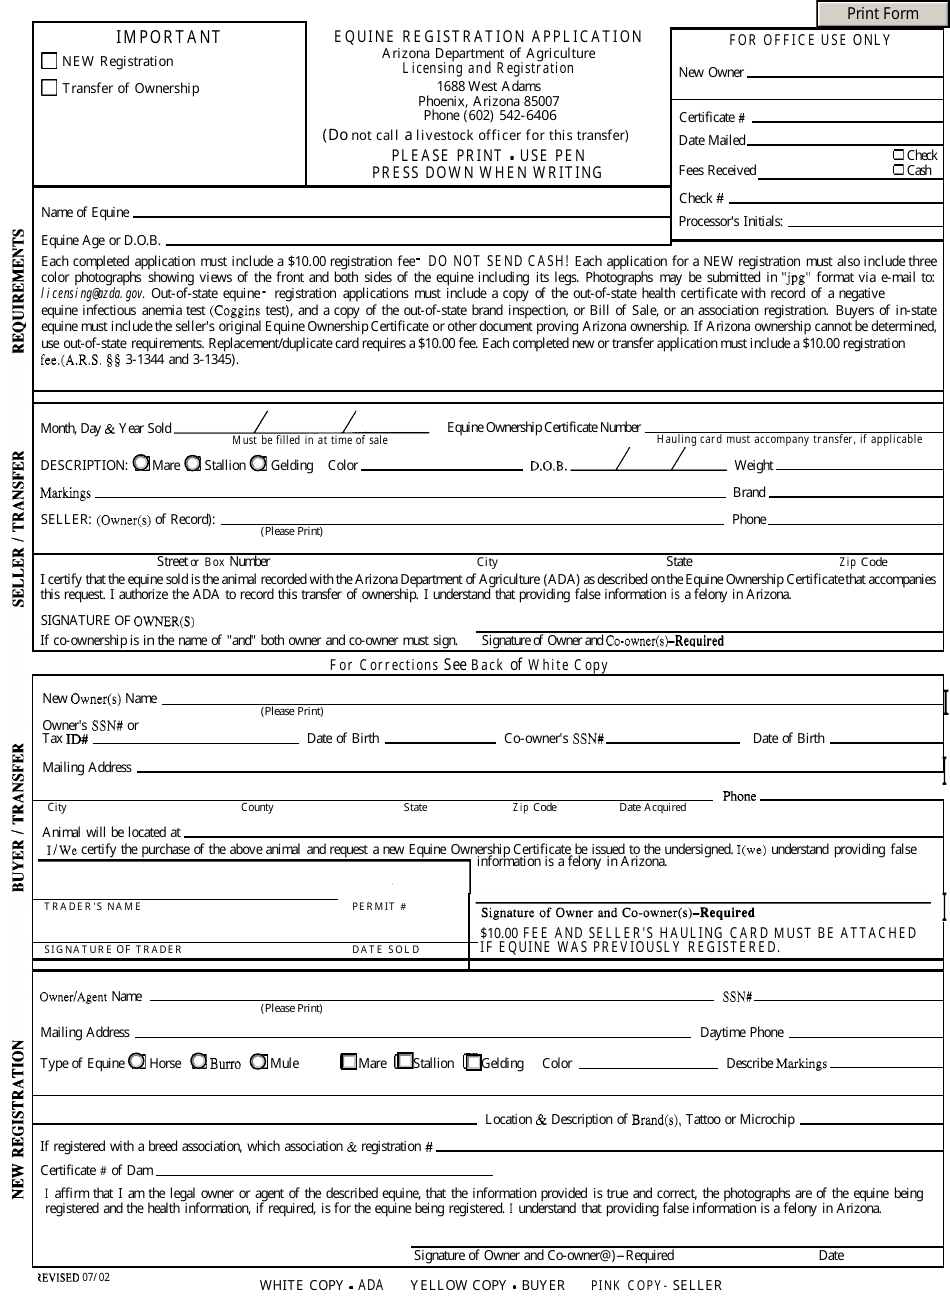 Equine Registration Application Form - Arizona, Page 1